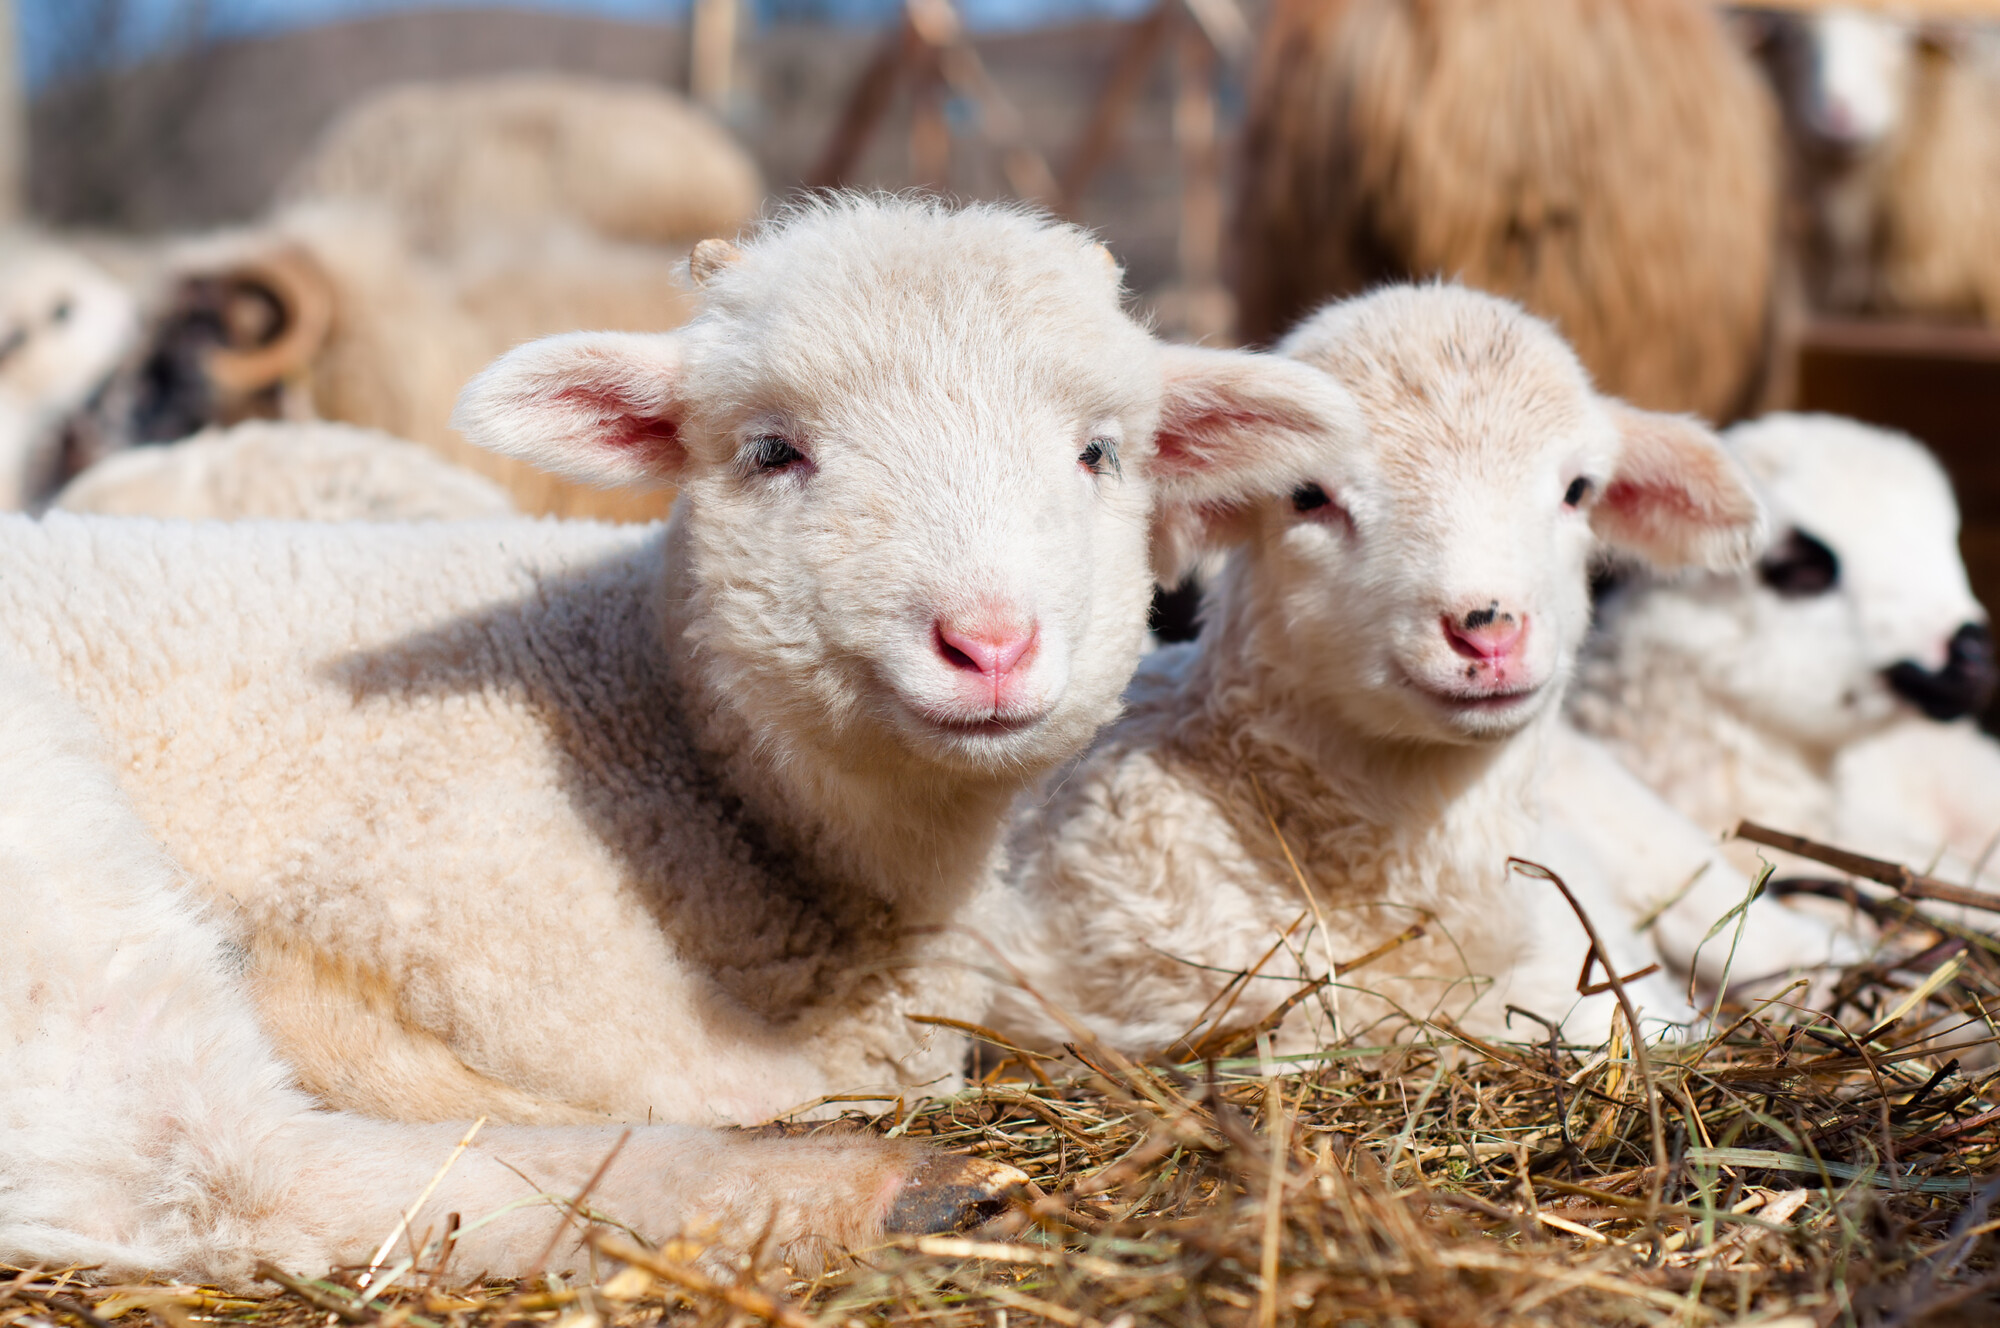 young lambs smiling and looking at camera while eating and sleeping - 'face of love lamb'